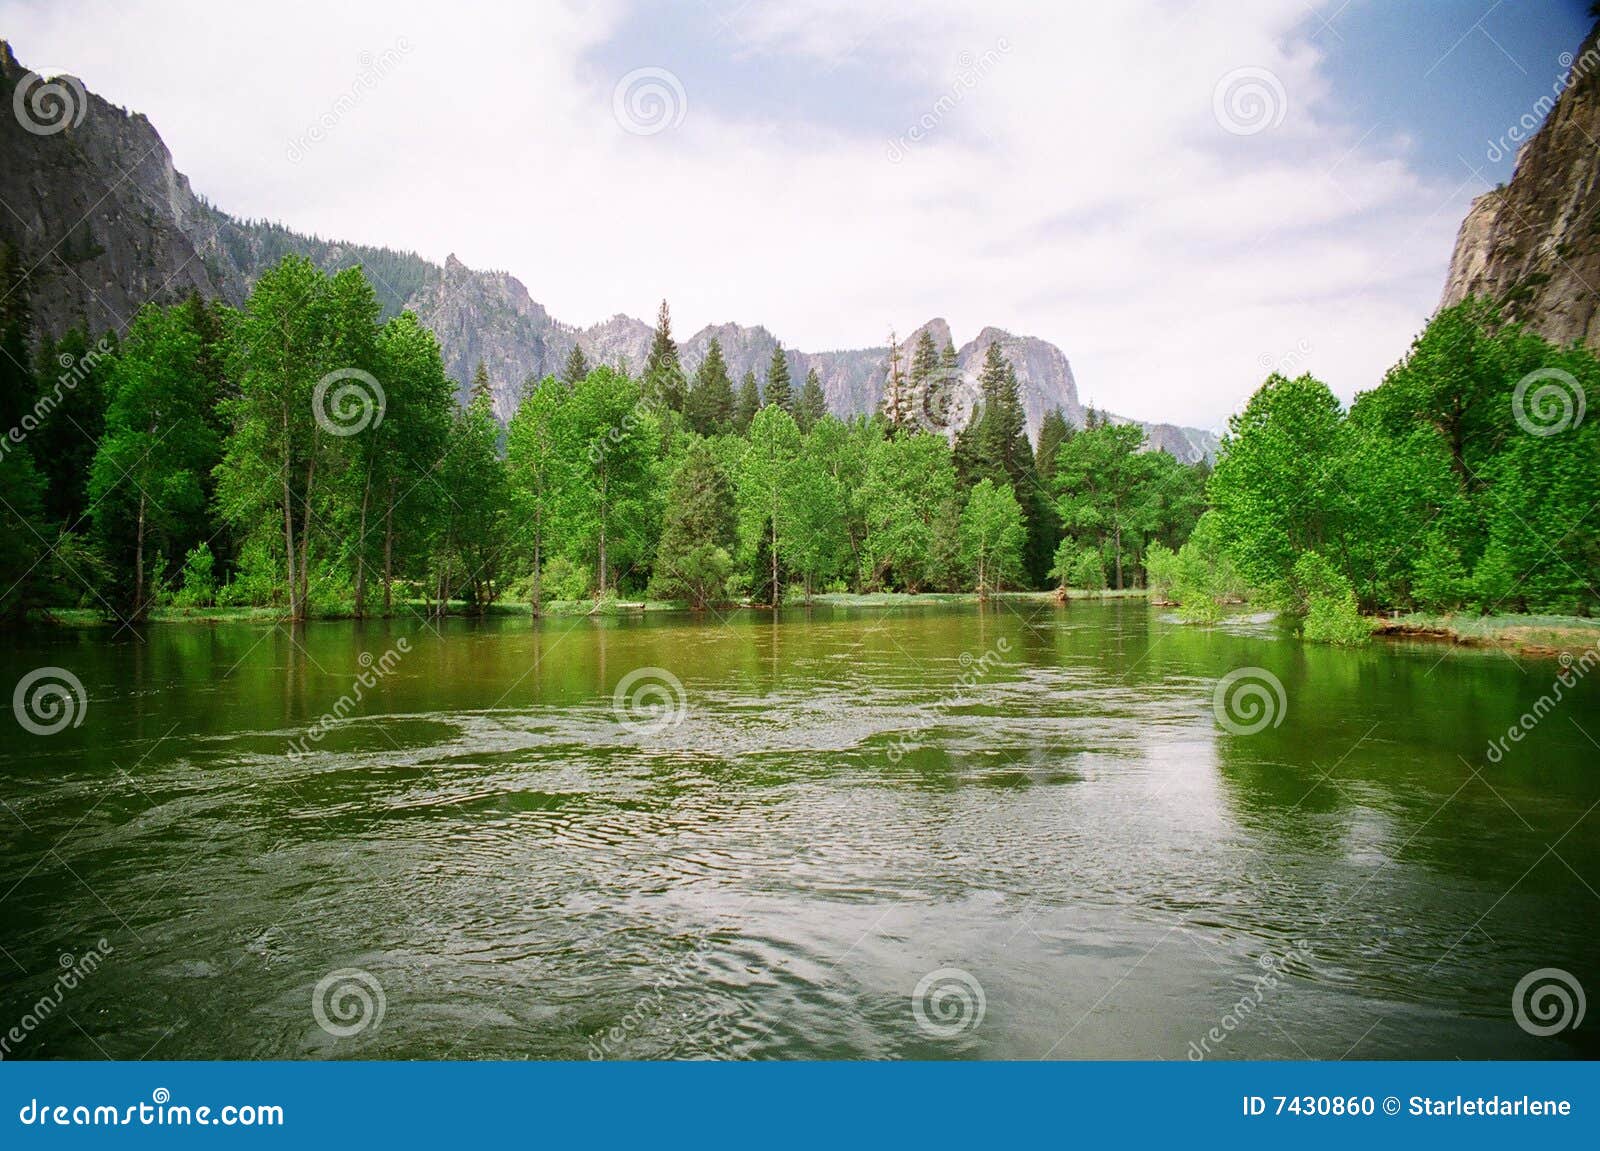 merced river in yosemite national park